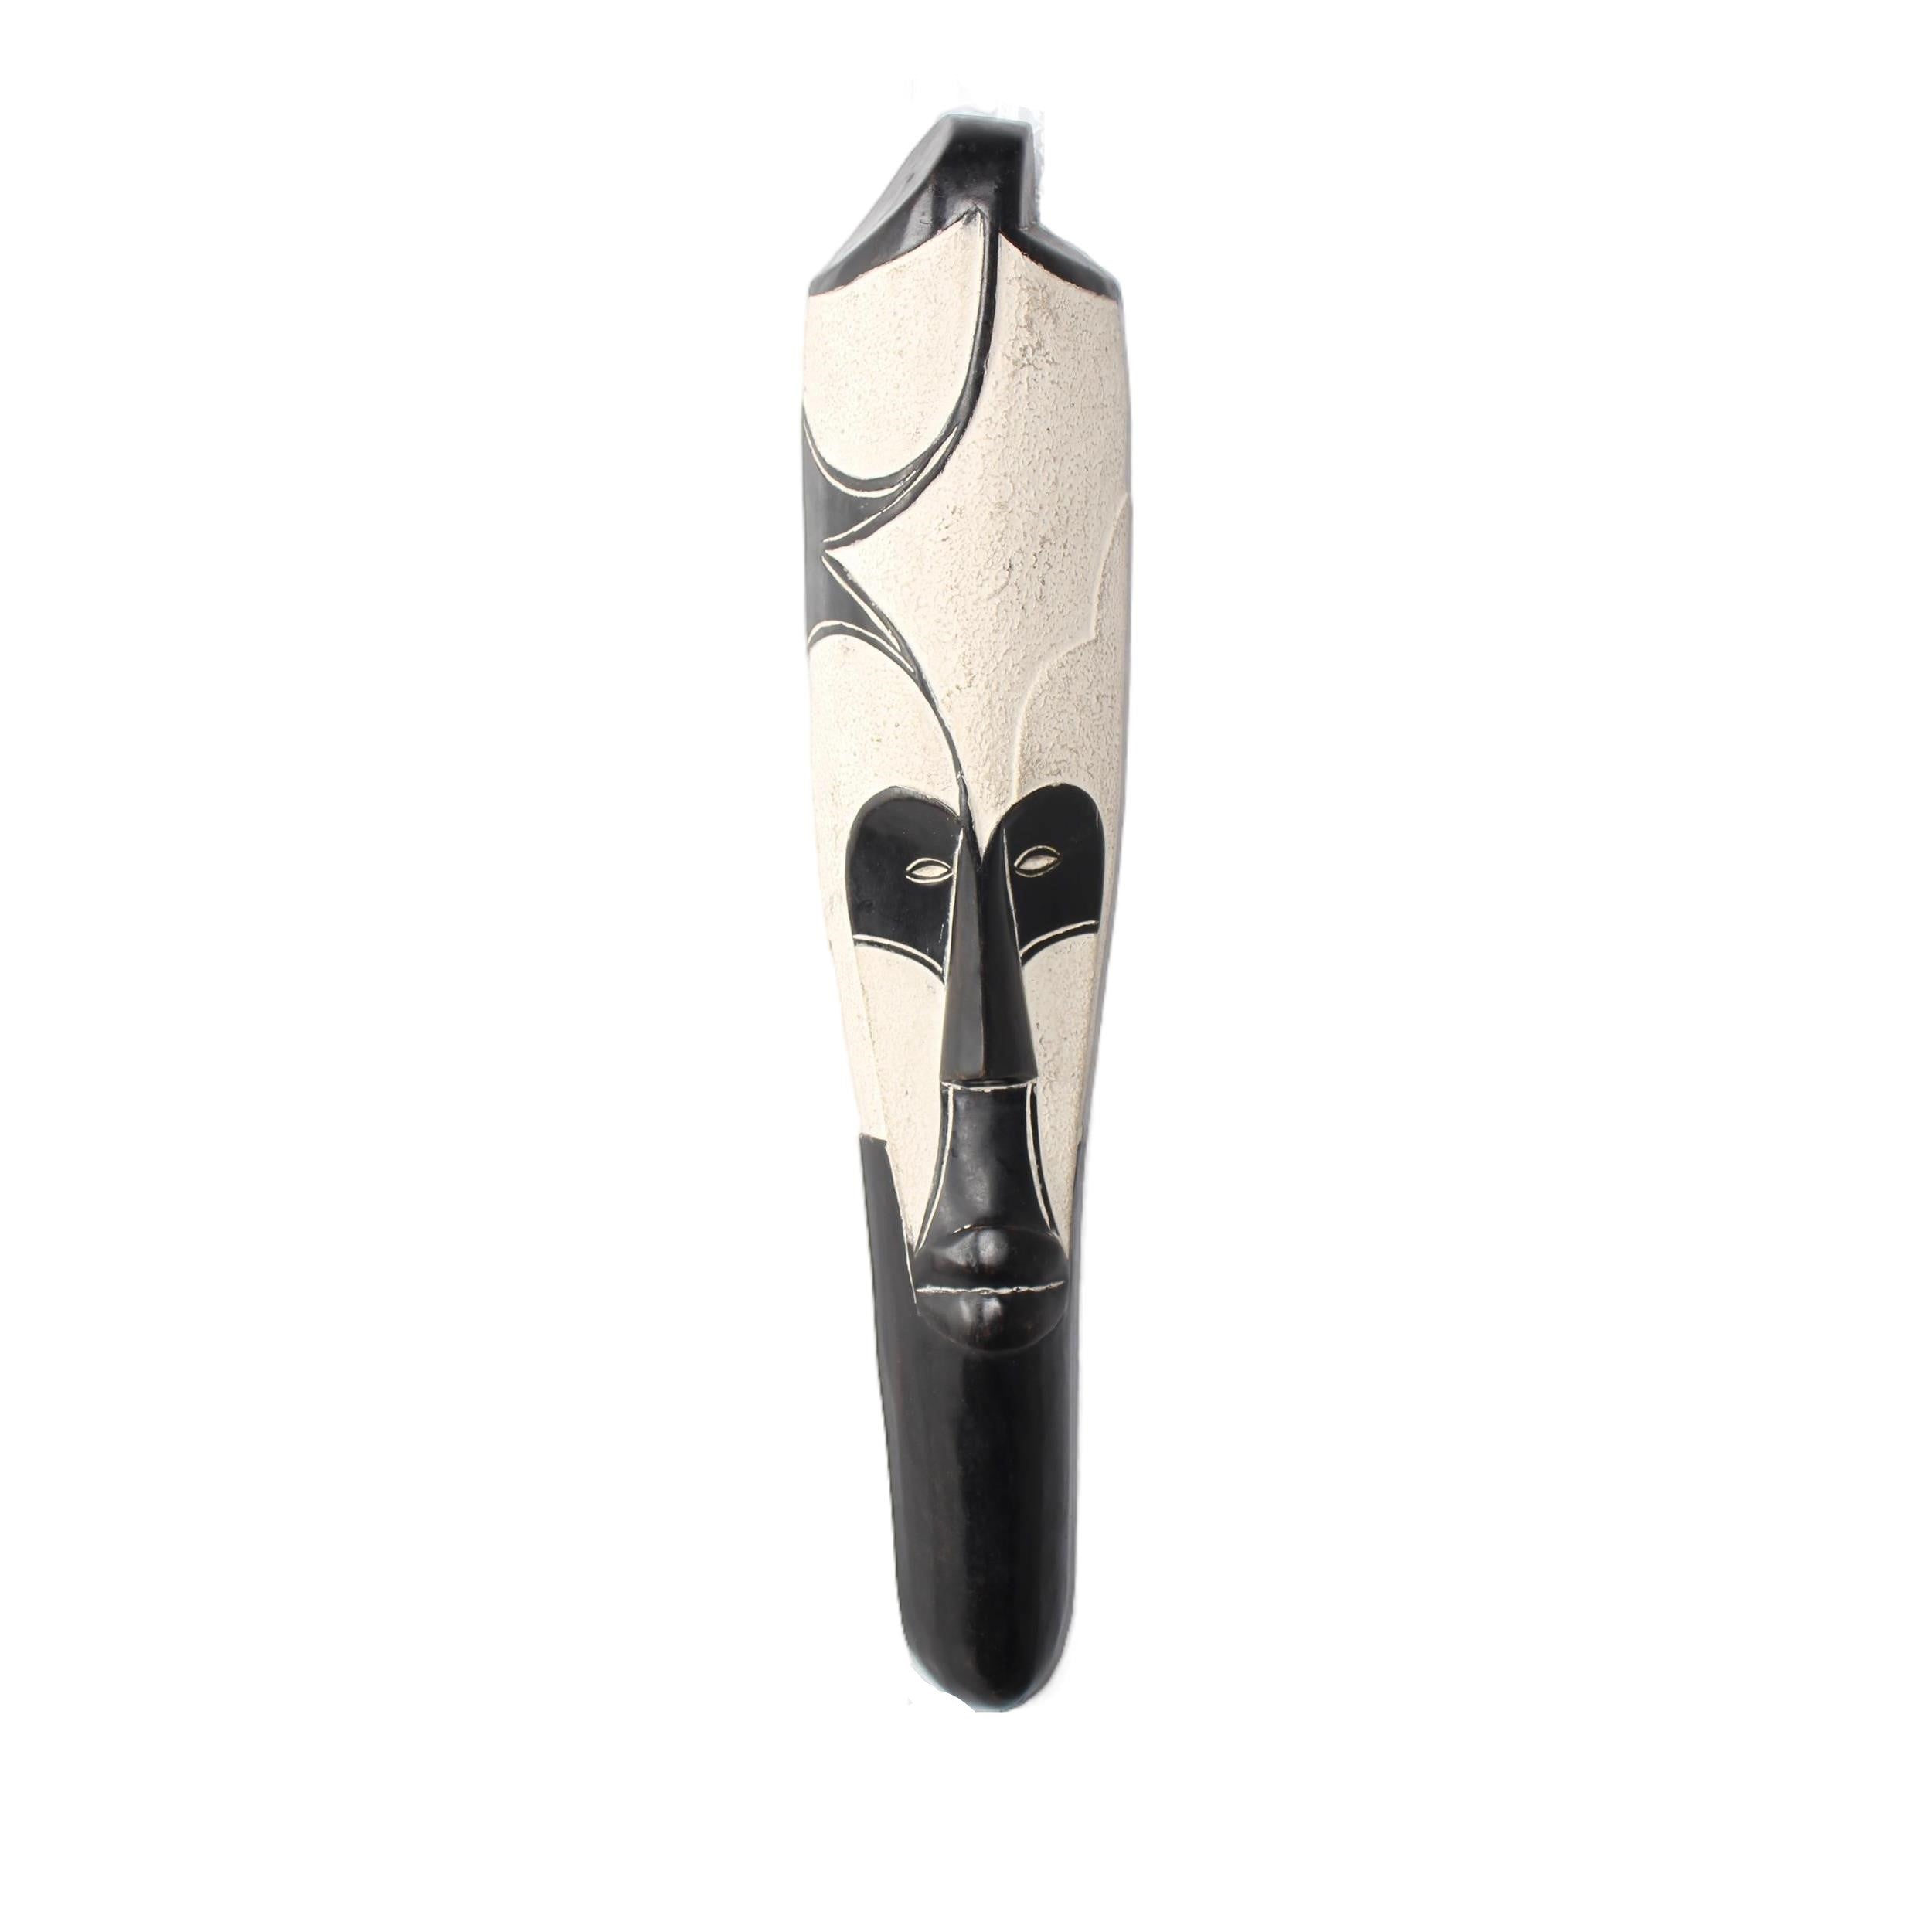 Fang Tribe Mask ~23.6" Tall